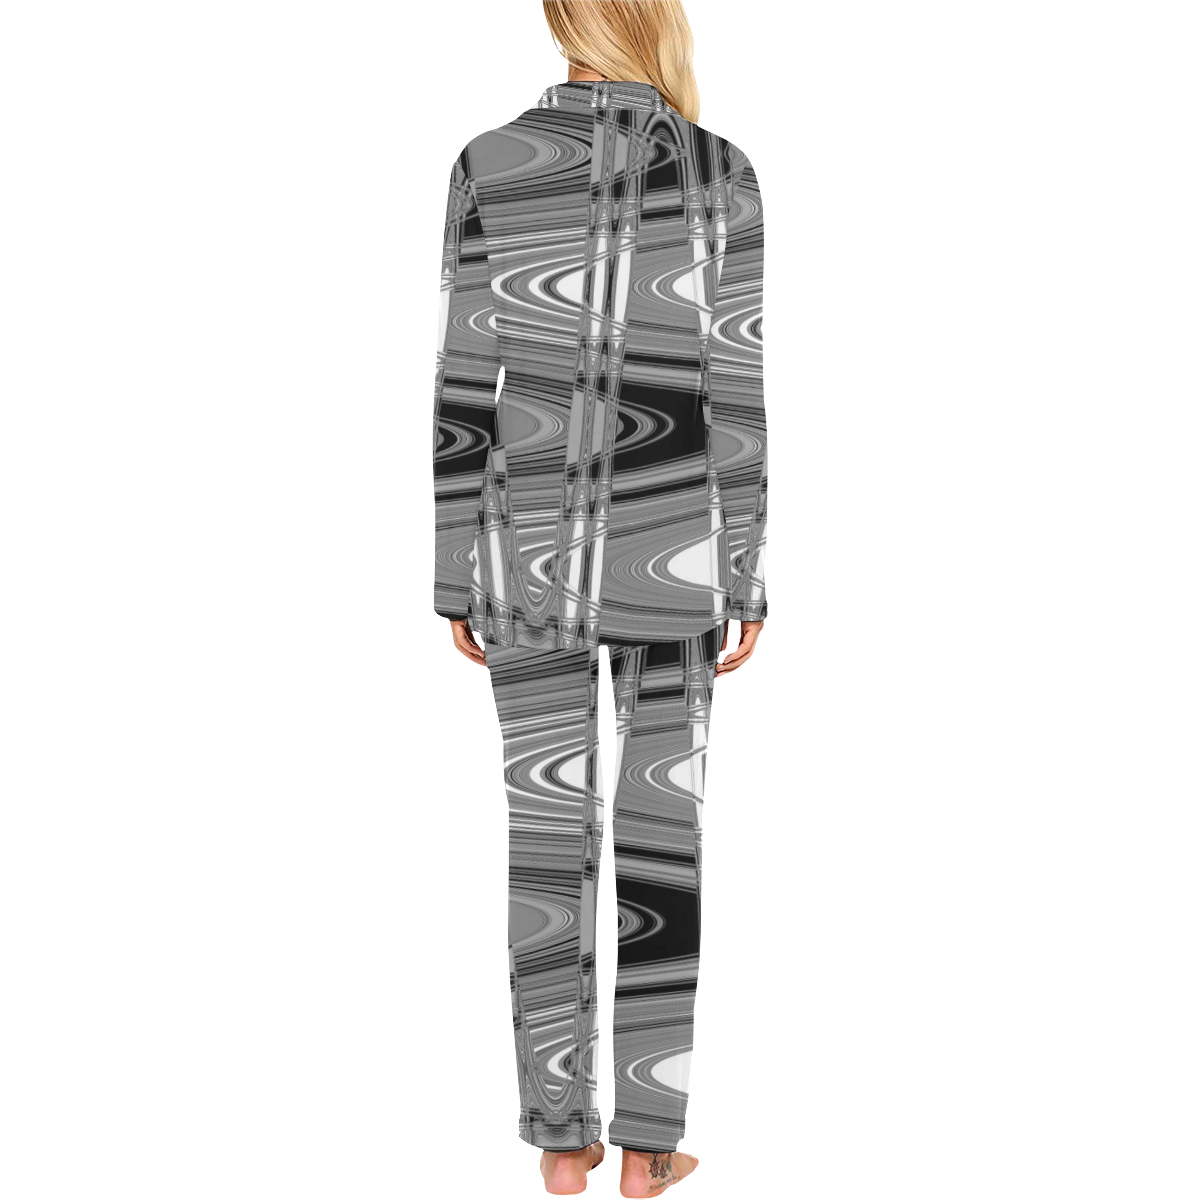 PJ STANCE Women's Long Pajama Set